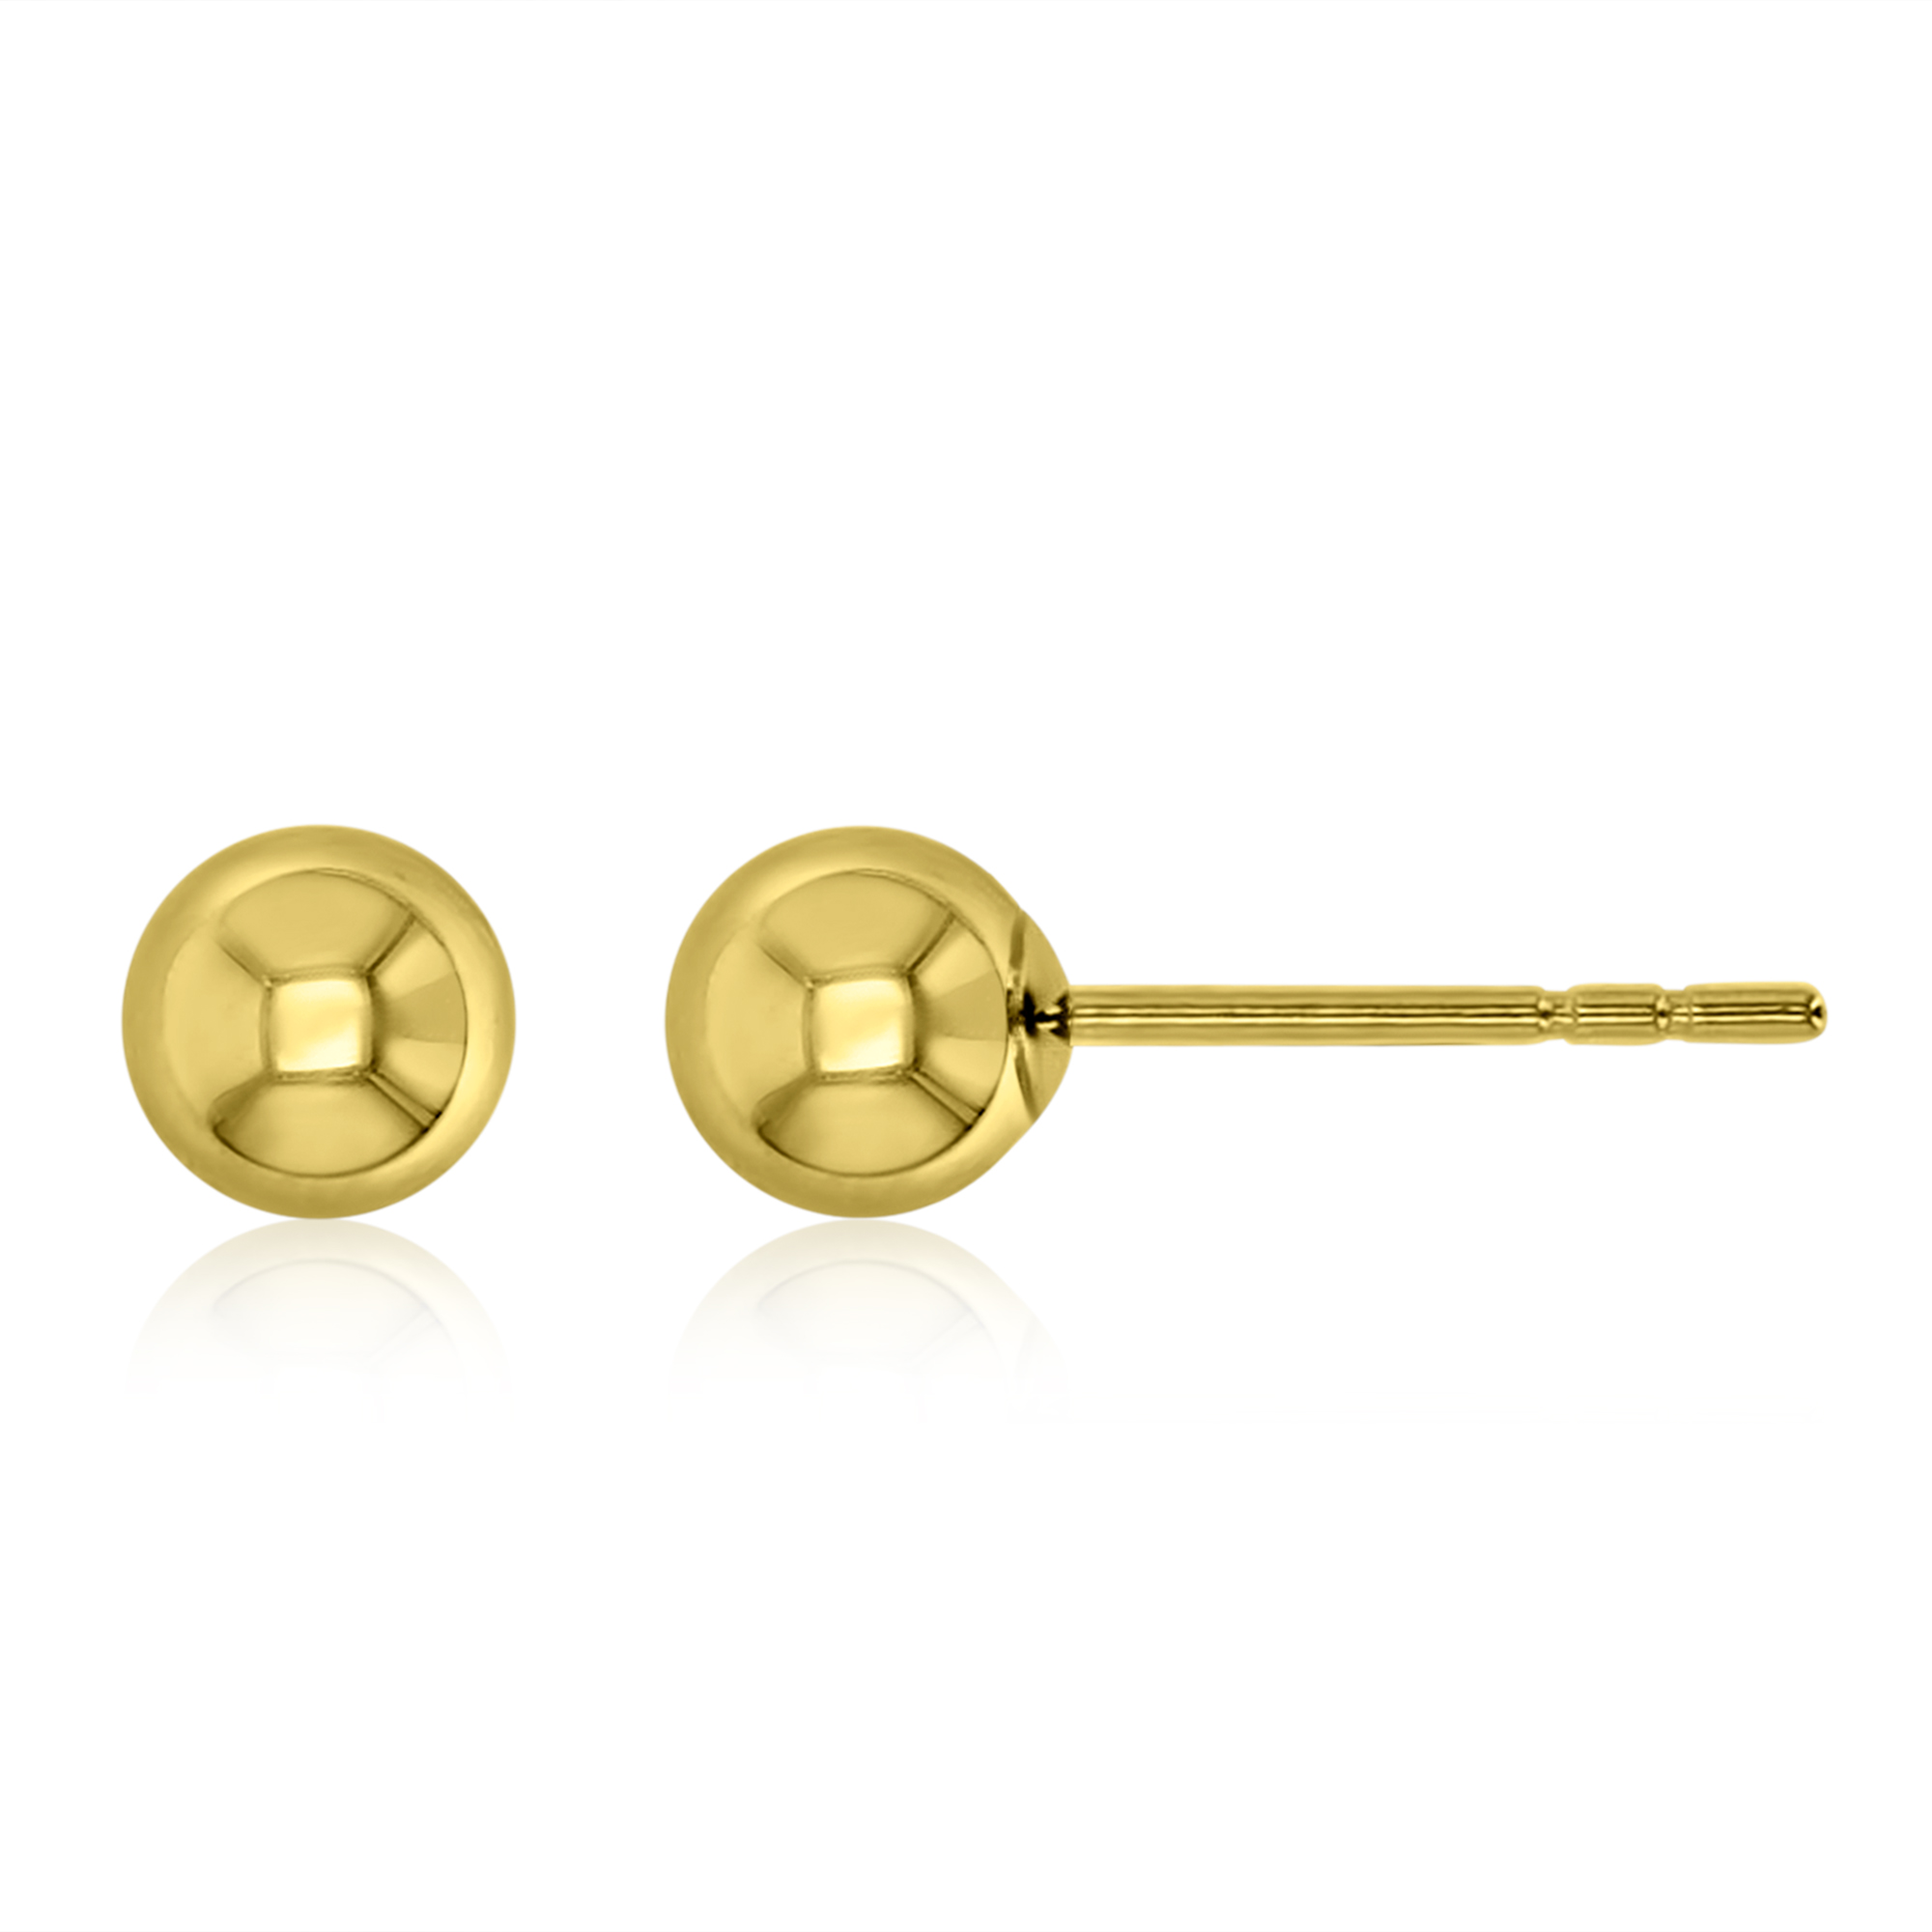 10K Yellow Gold 4mm Ball Stud Earring